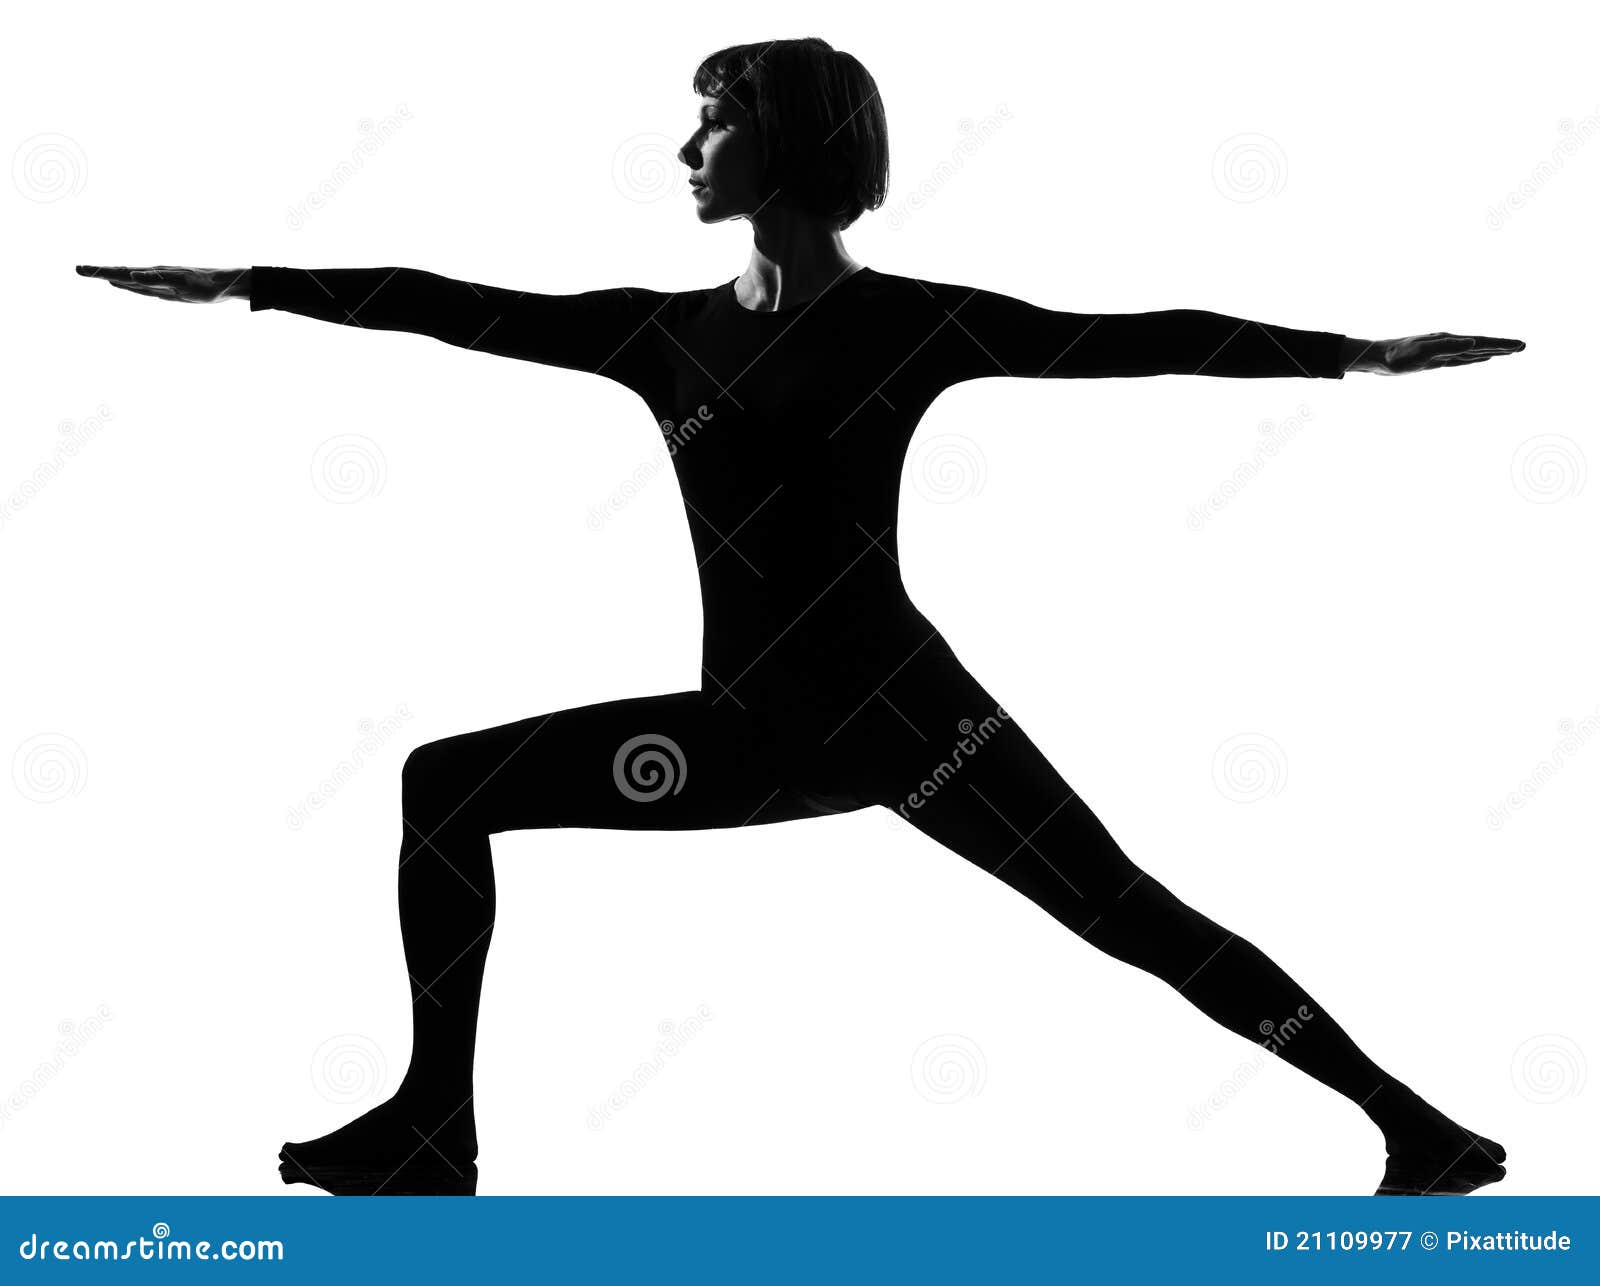 30+ Top Image Warrior 1 2 3 Yoga Pose | Warrior pose yoga, Yoga sequences, Warrior  yoga